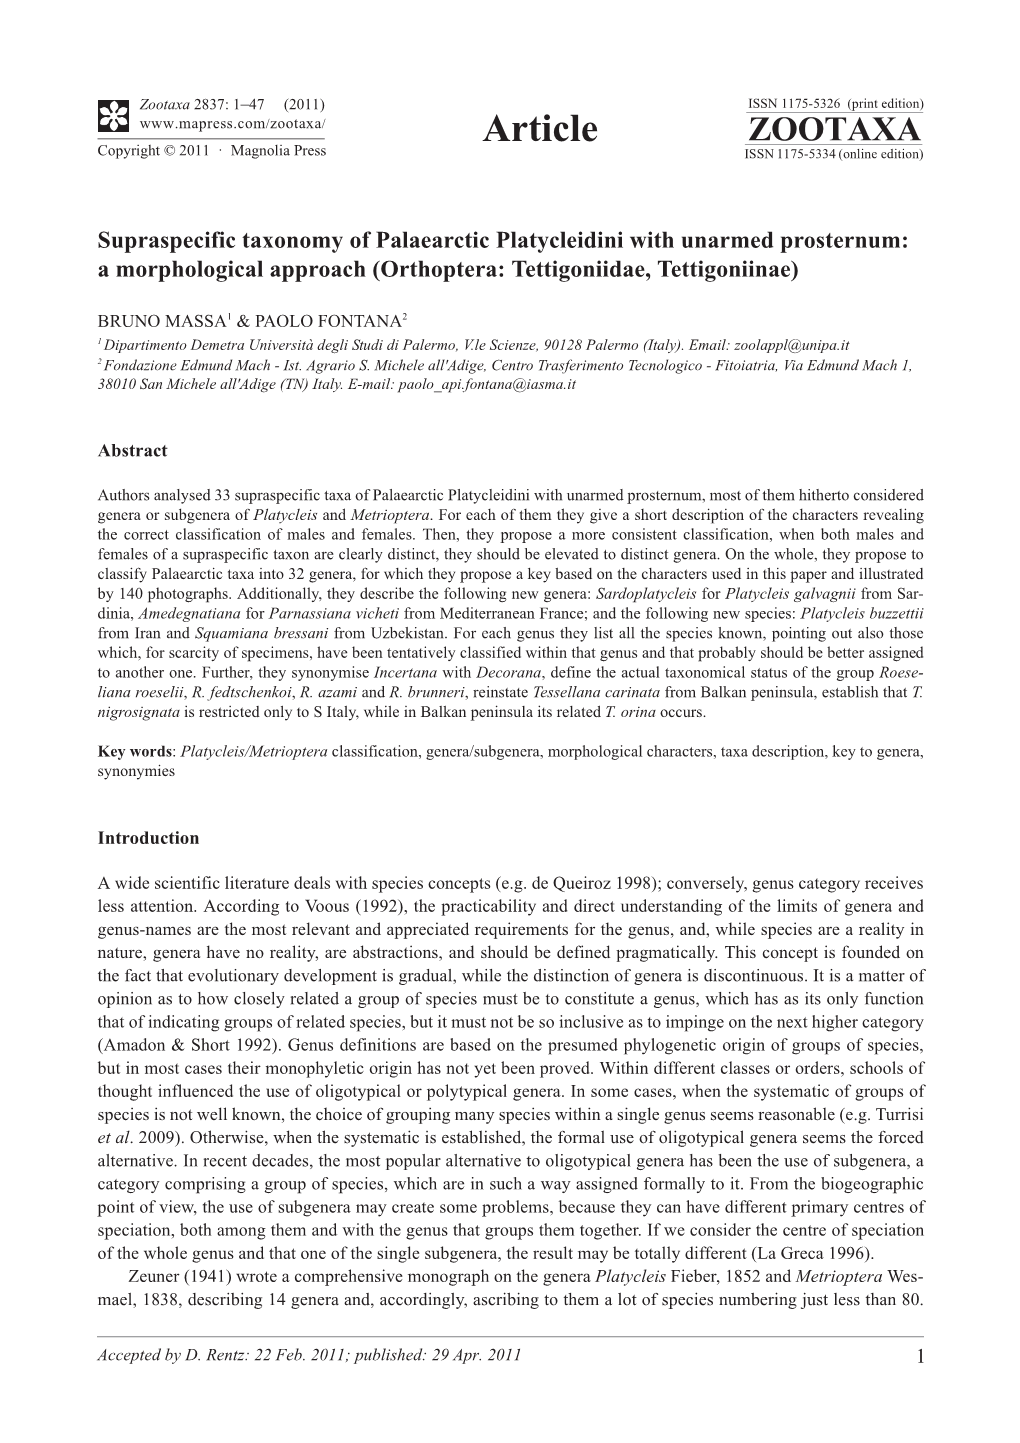 Supraspecific Taxonomy of Palaearctic Platycleidini with Unarmed Prosternum: a Morphological Approach (Orthoptera: Tettigoniidae, Tettigoniinae)